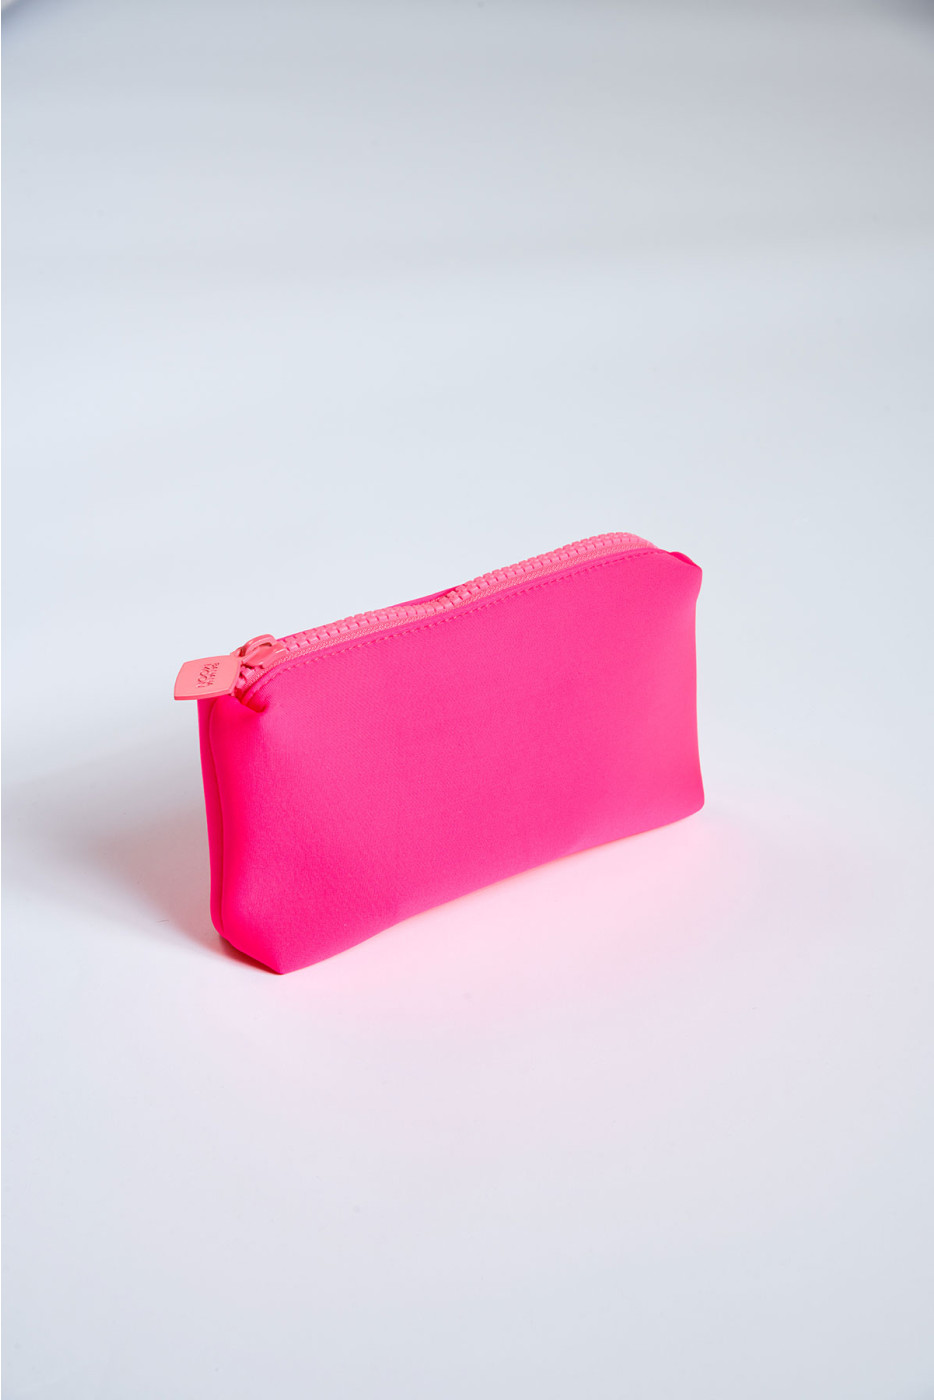 Neon Pouch pink neoprene pouch